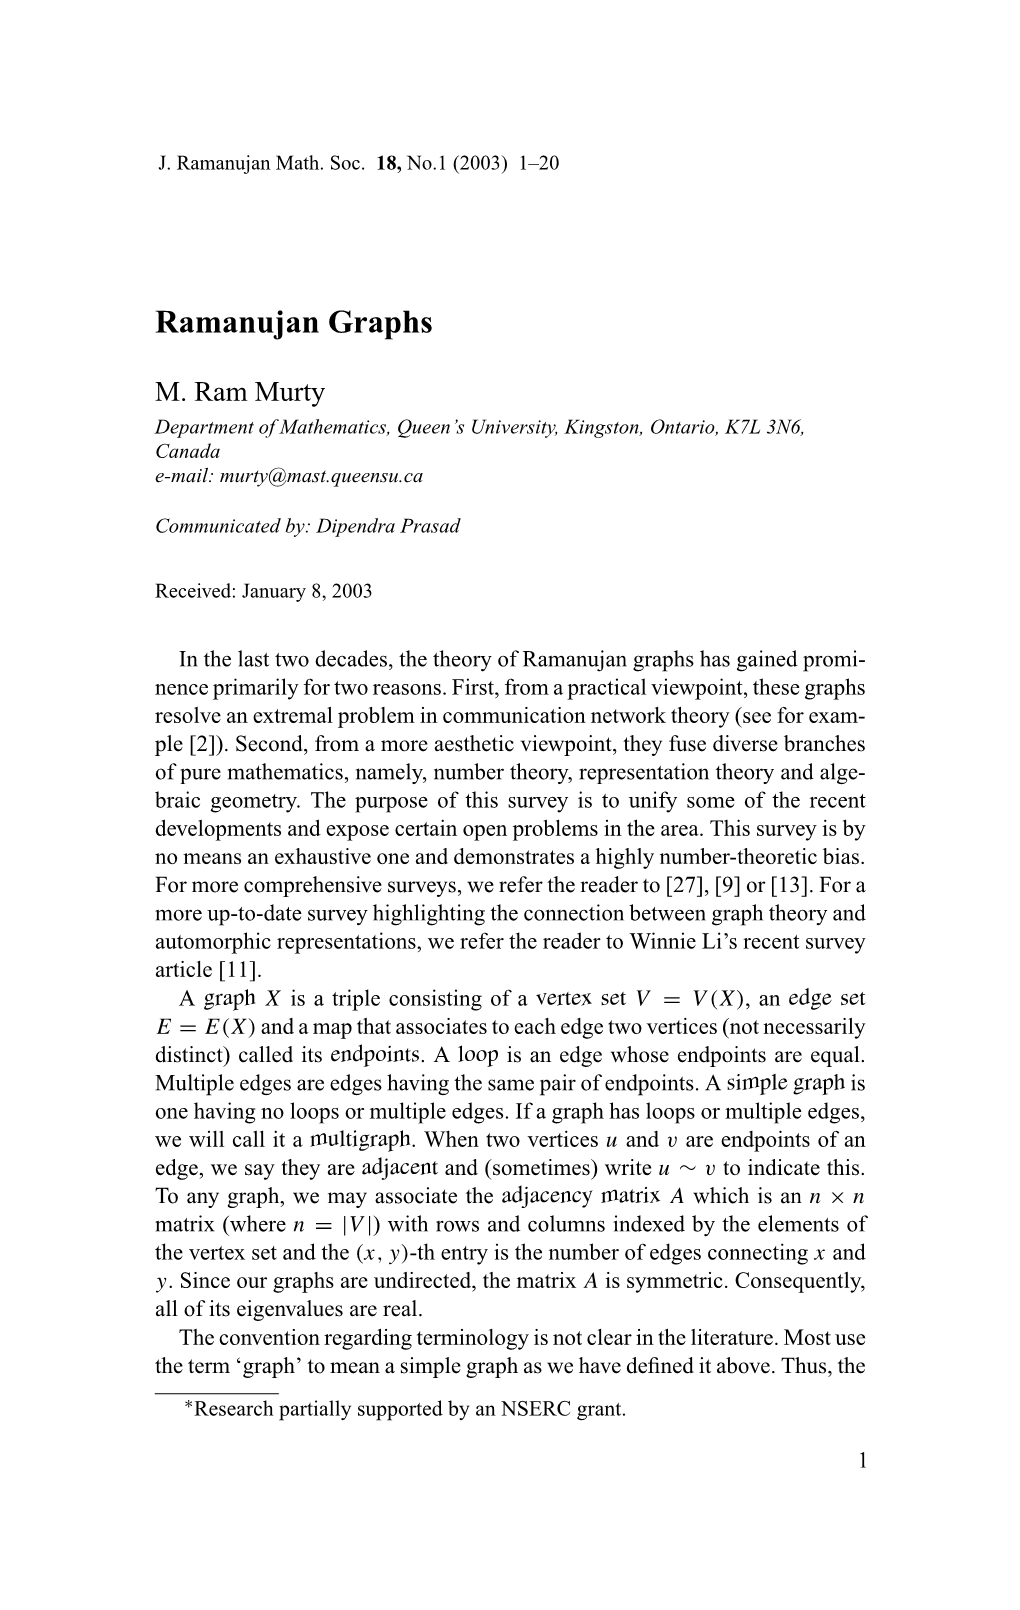 Ramanujan Graphs (M. Ram Murty, )